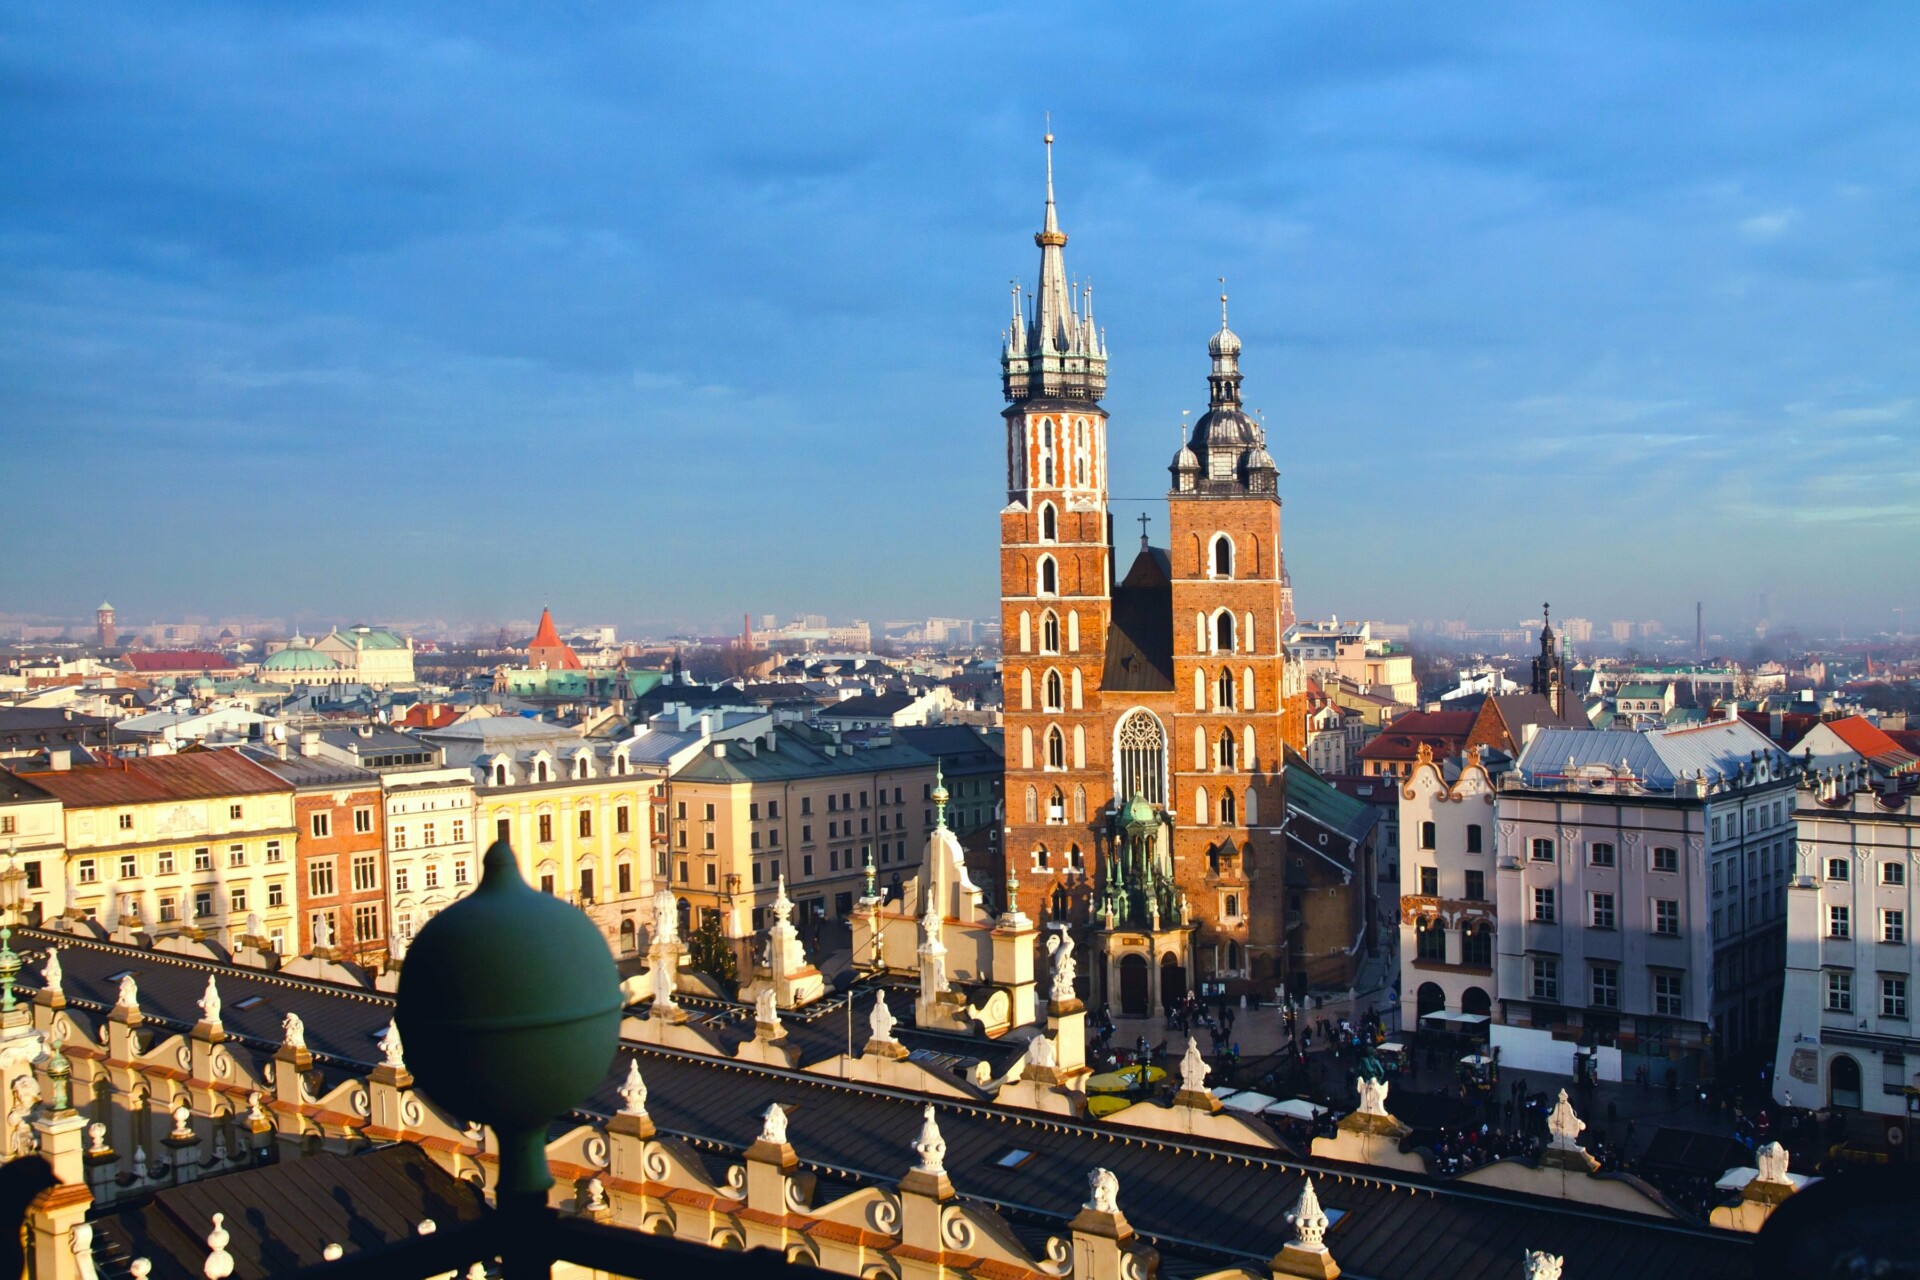 The city of Krakow, Poland